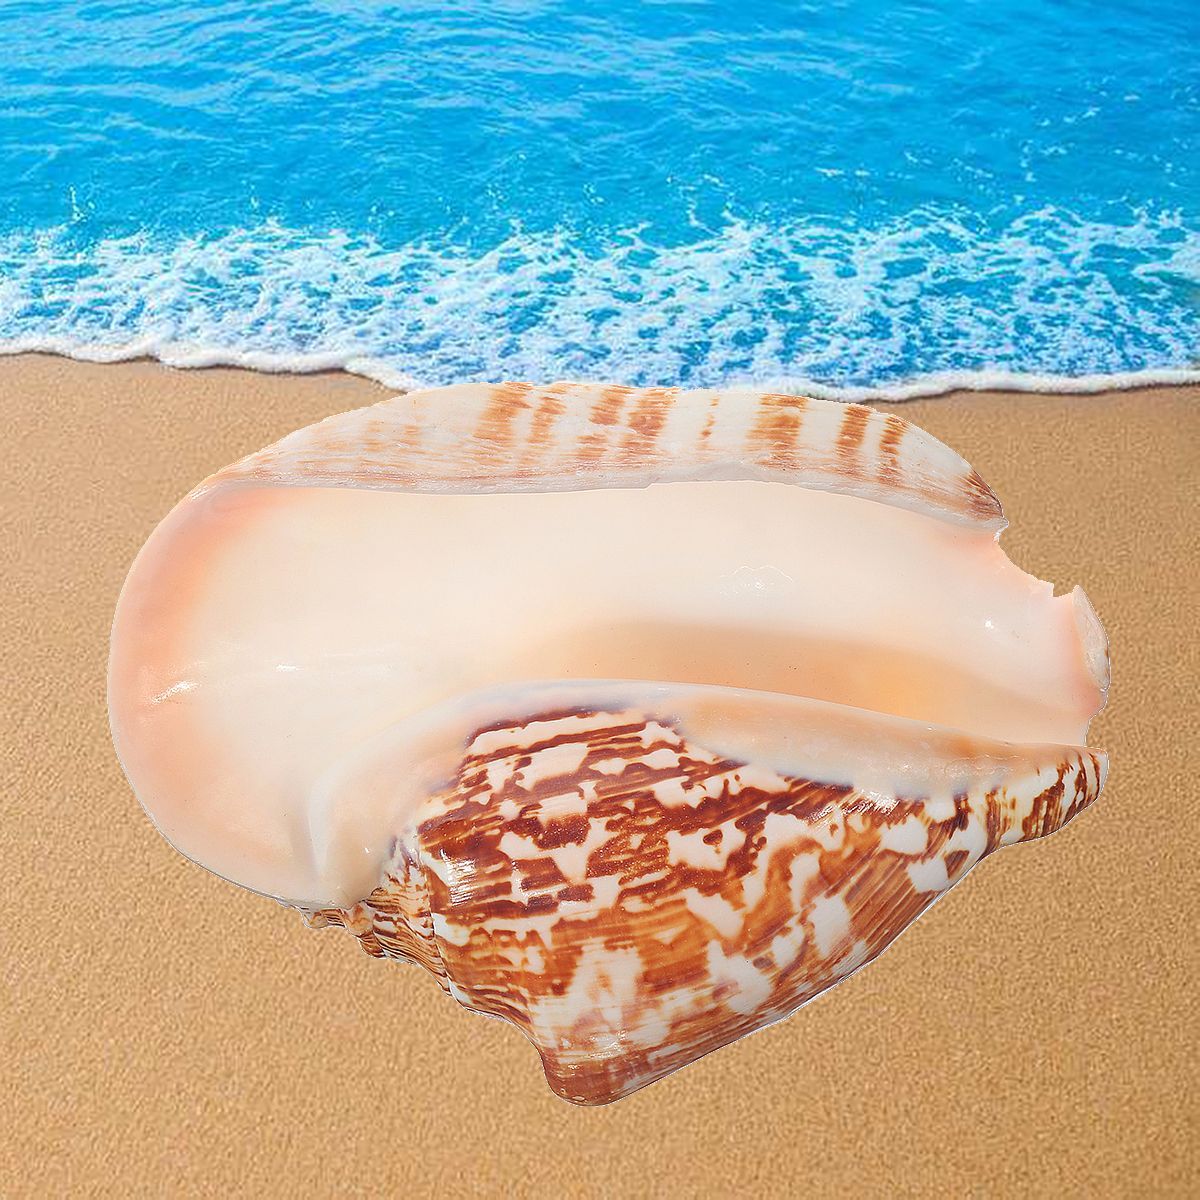 Natural-Shell-Conch-Phoenix-Ear-Conch-Coral-Sea-Beach-Ornament-Fish-Tank-Decorations-1476959